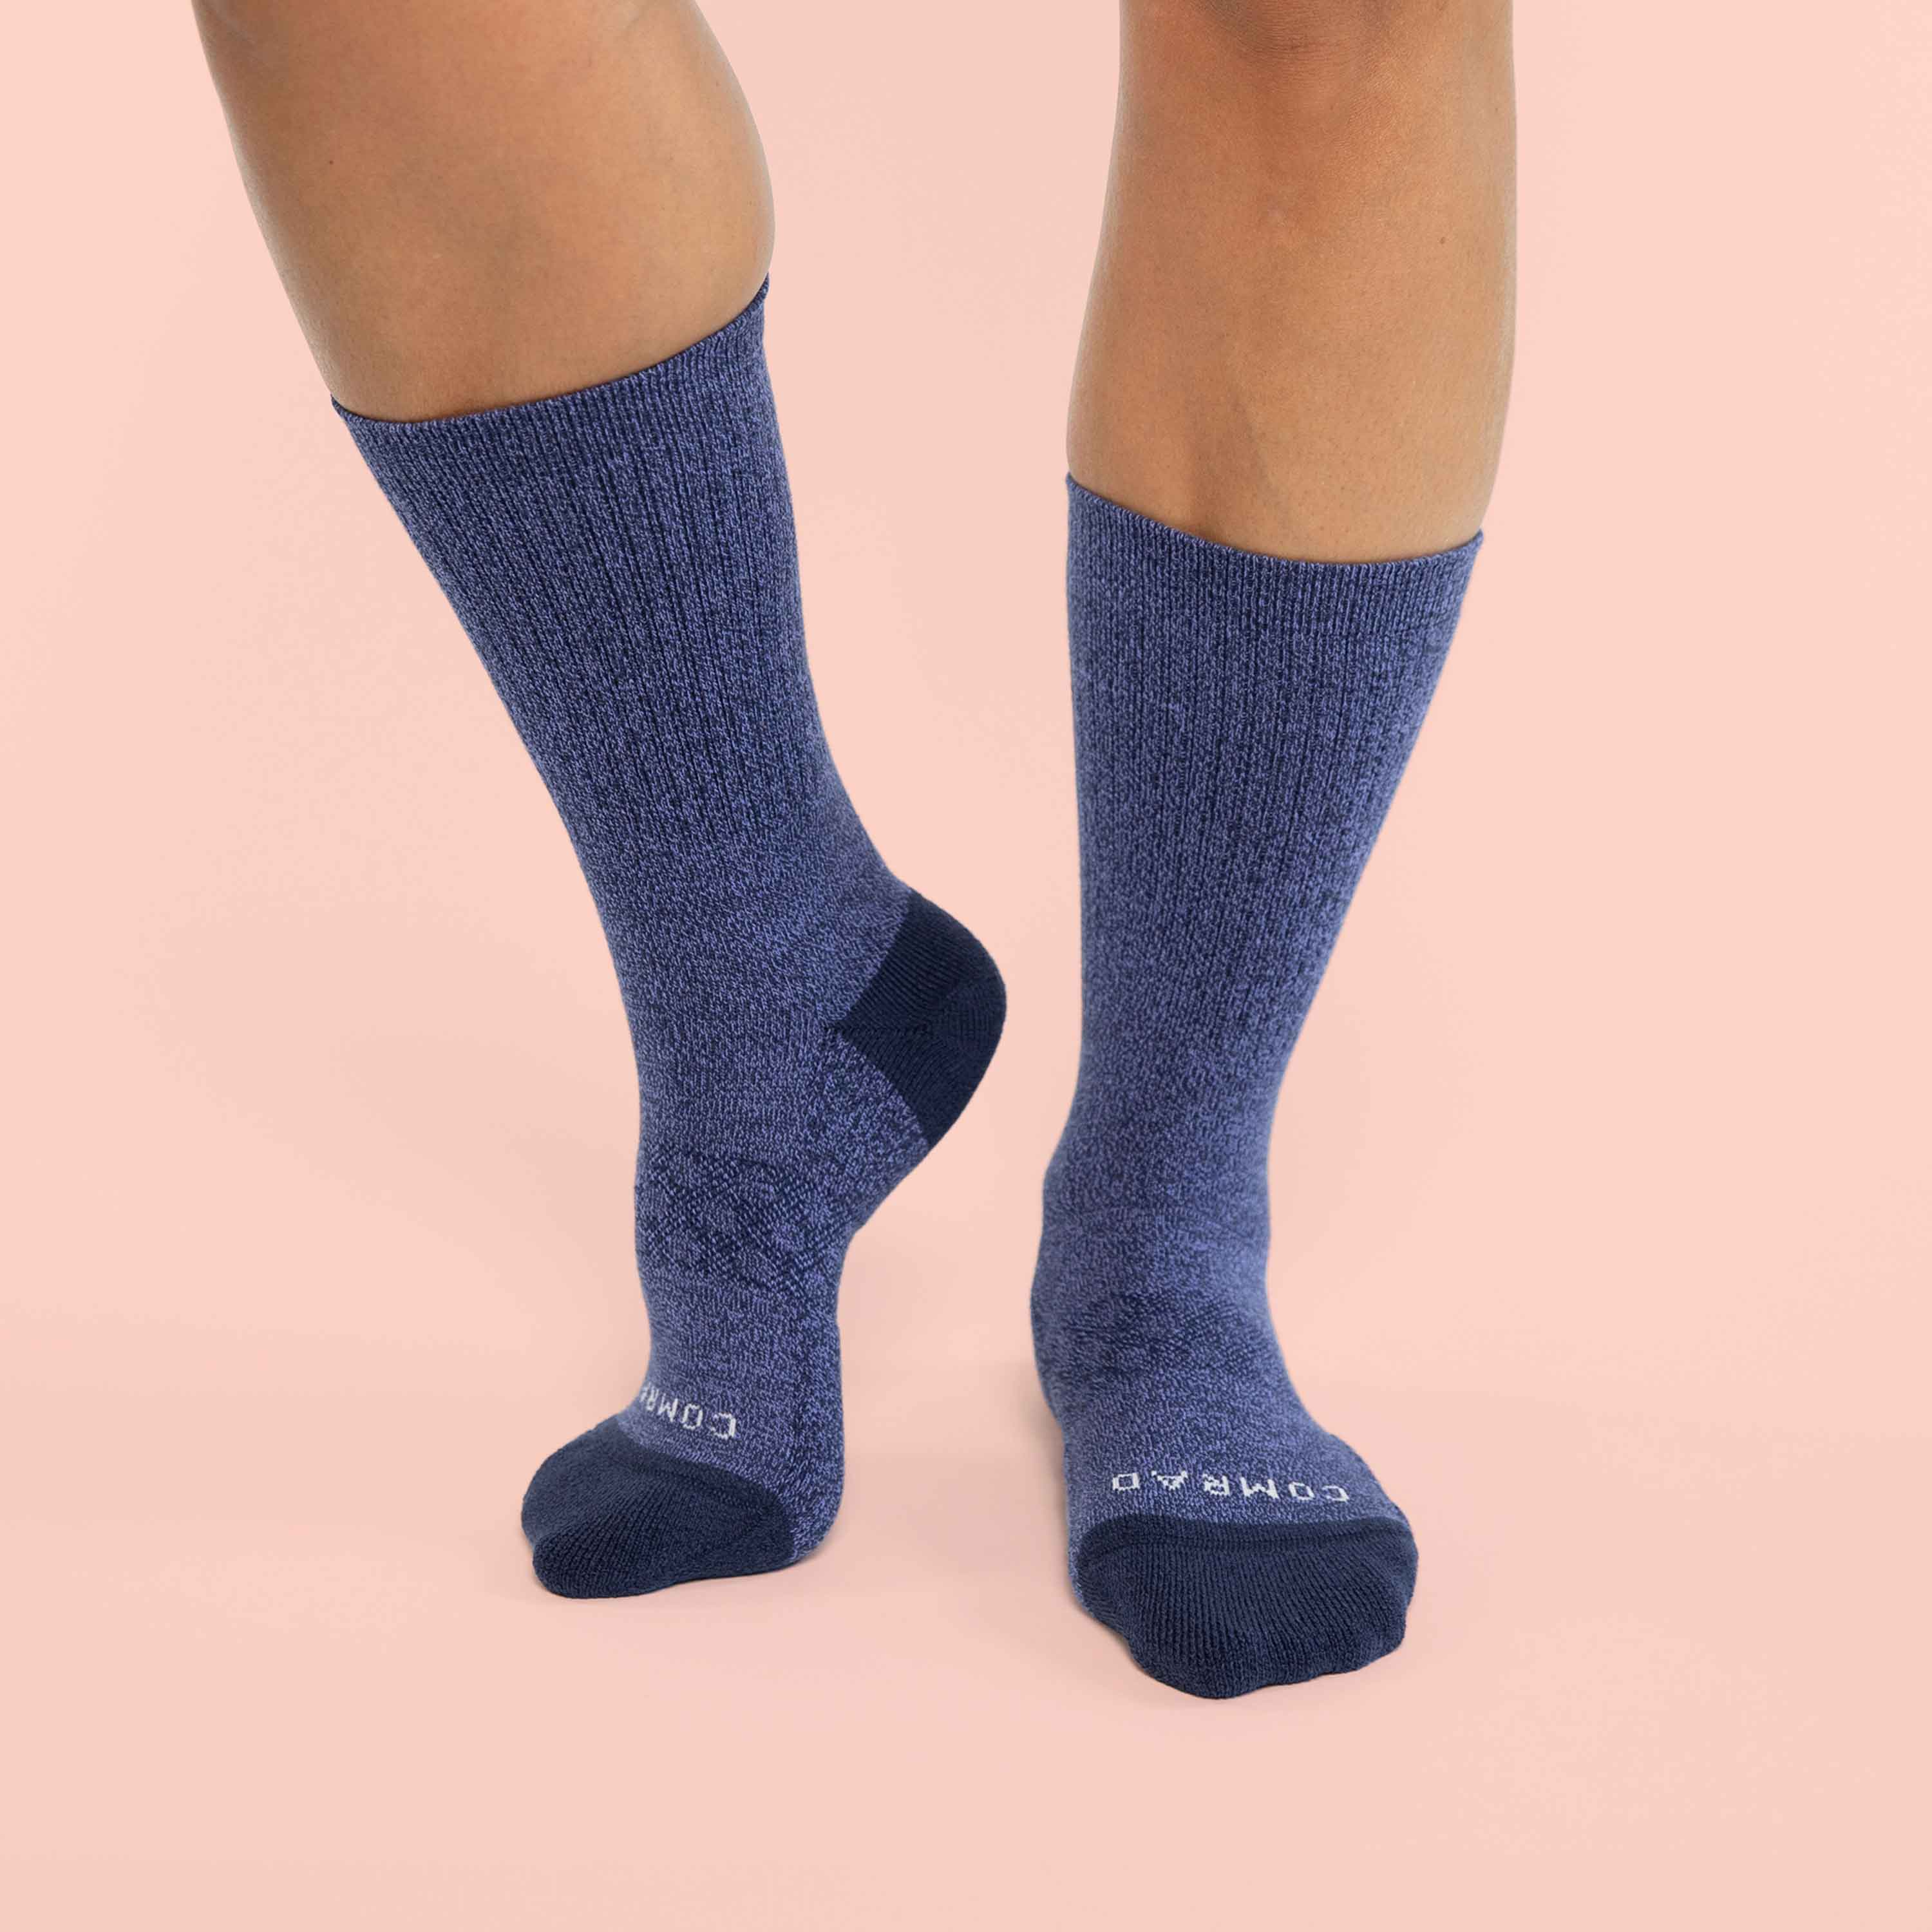 Navy Blue Striped Cotton Knee High Socks on Sale - 2 Pack